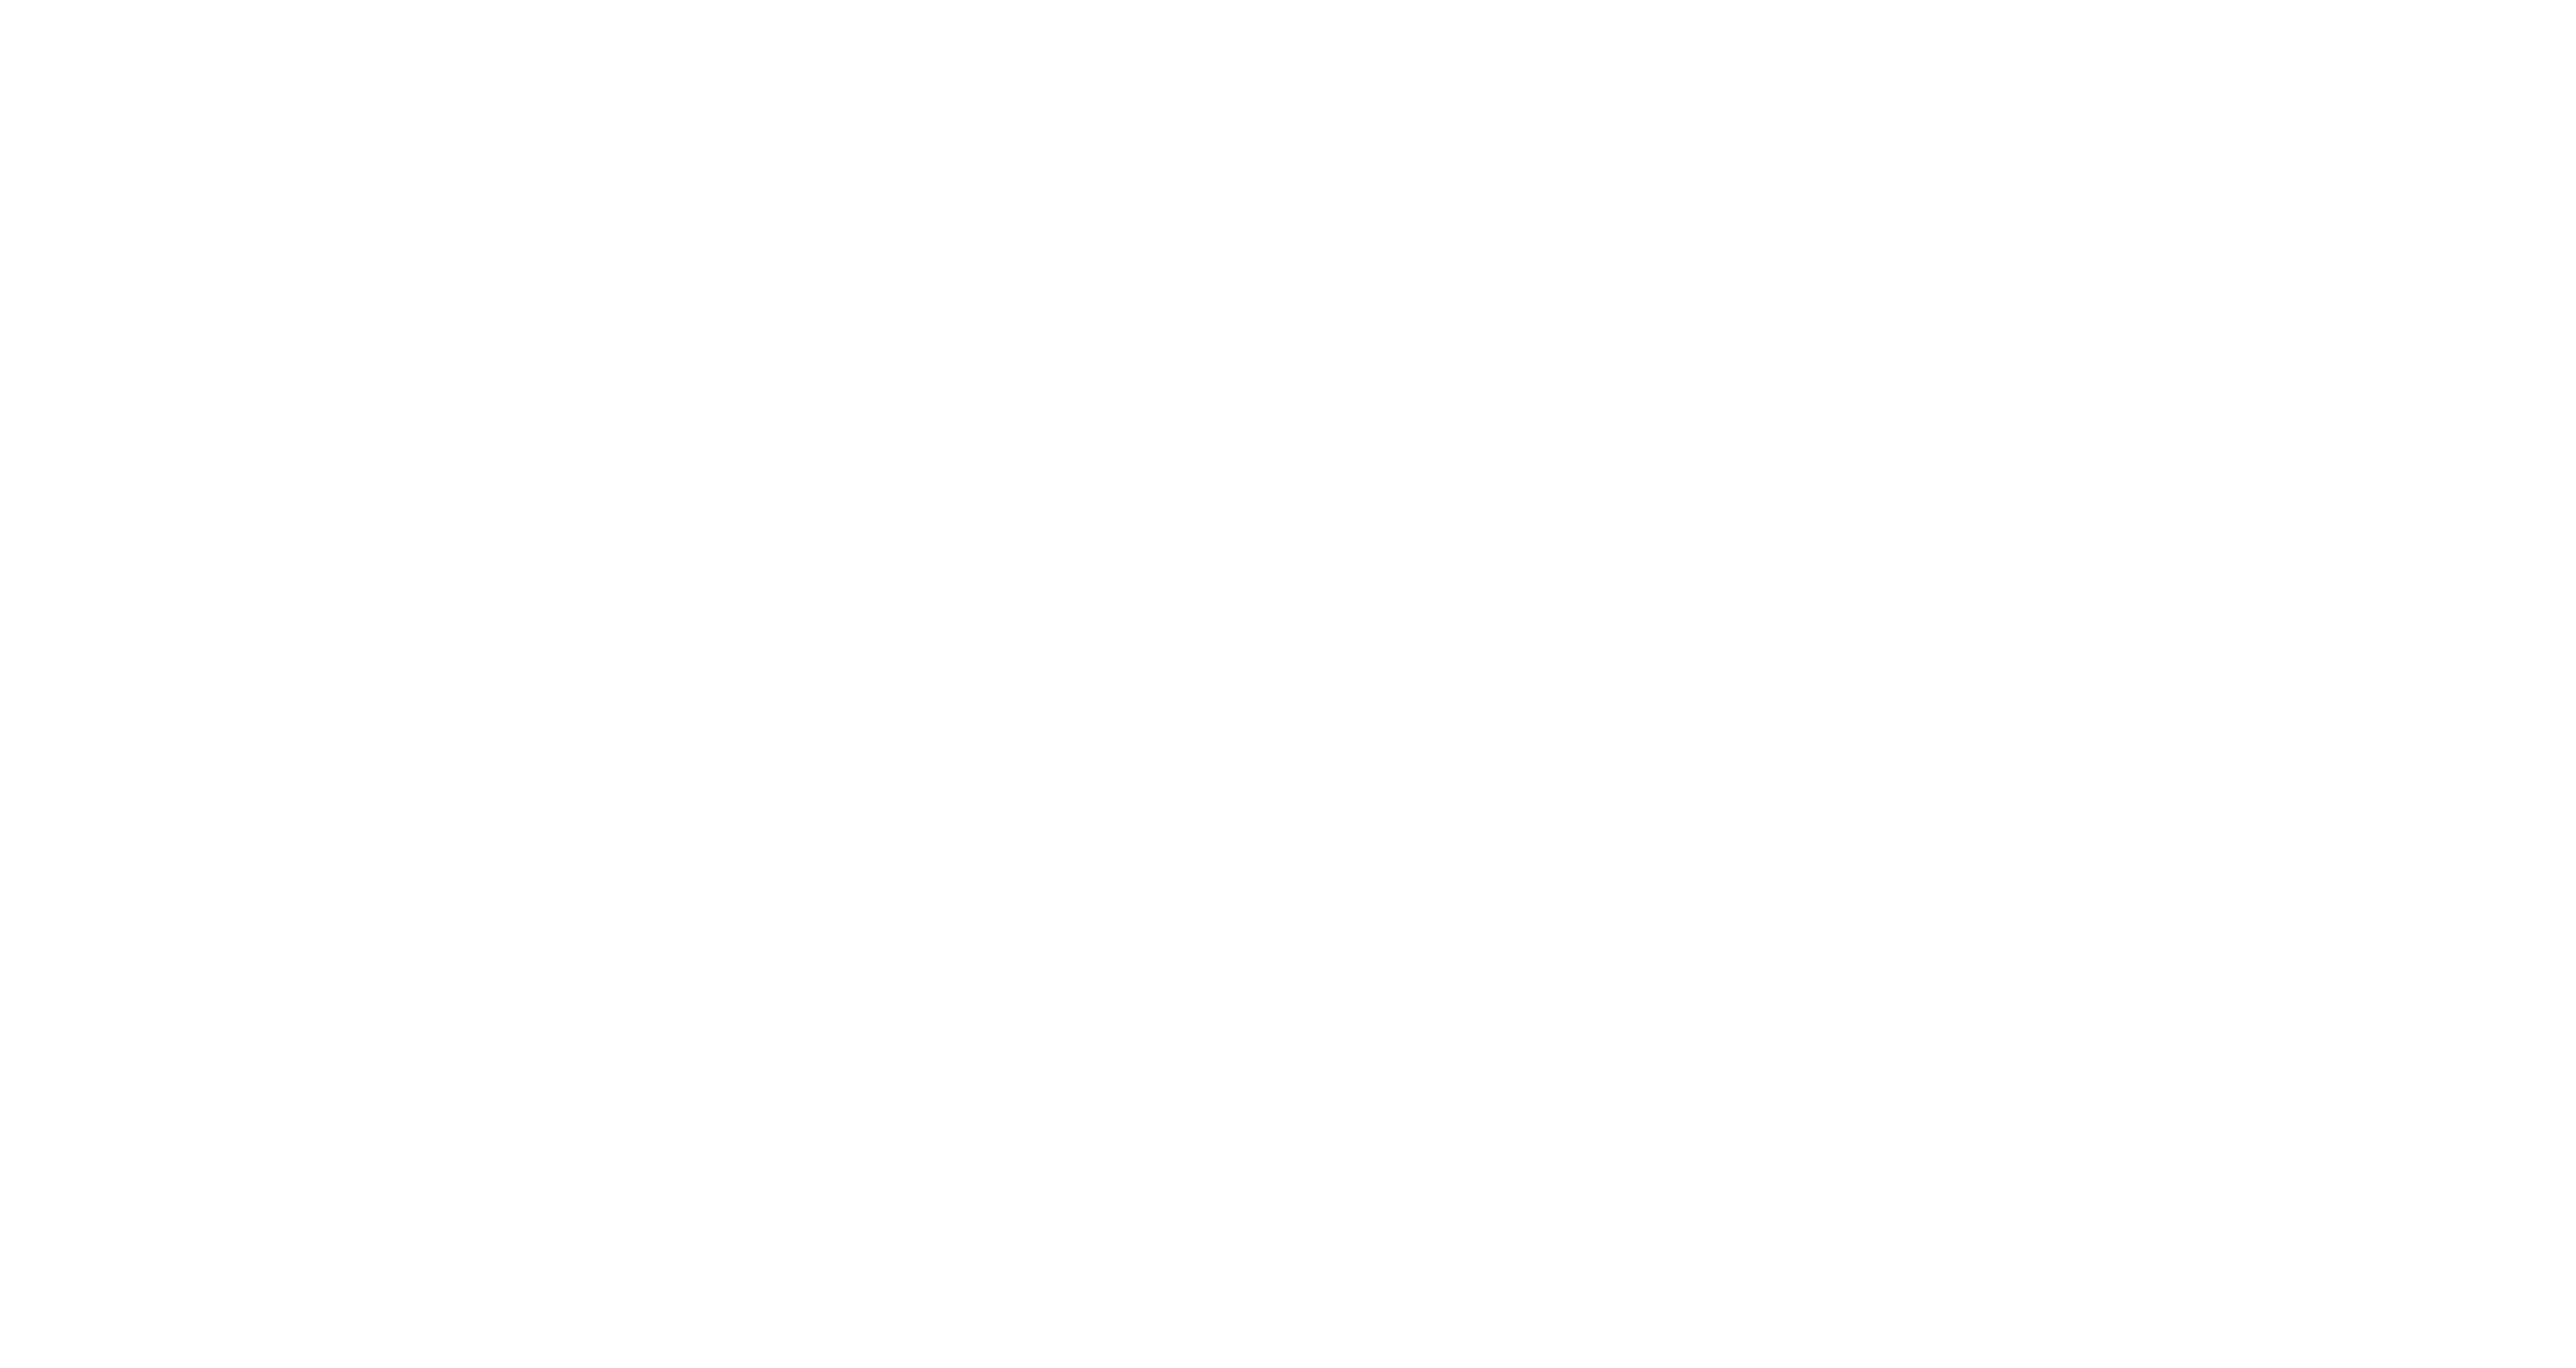 Unrig Our Economy NYC